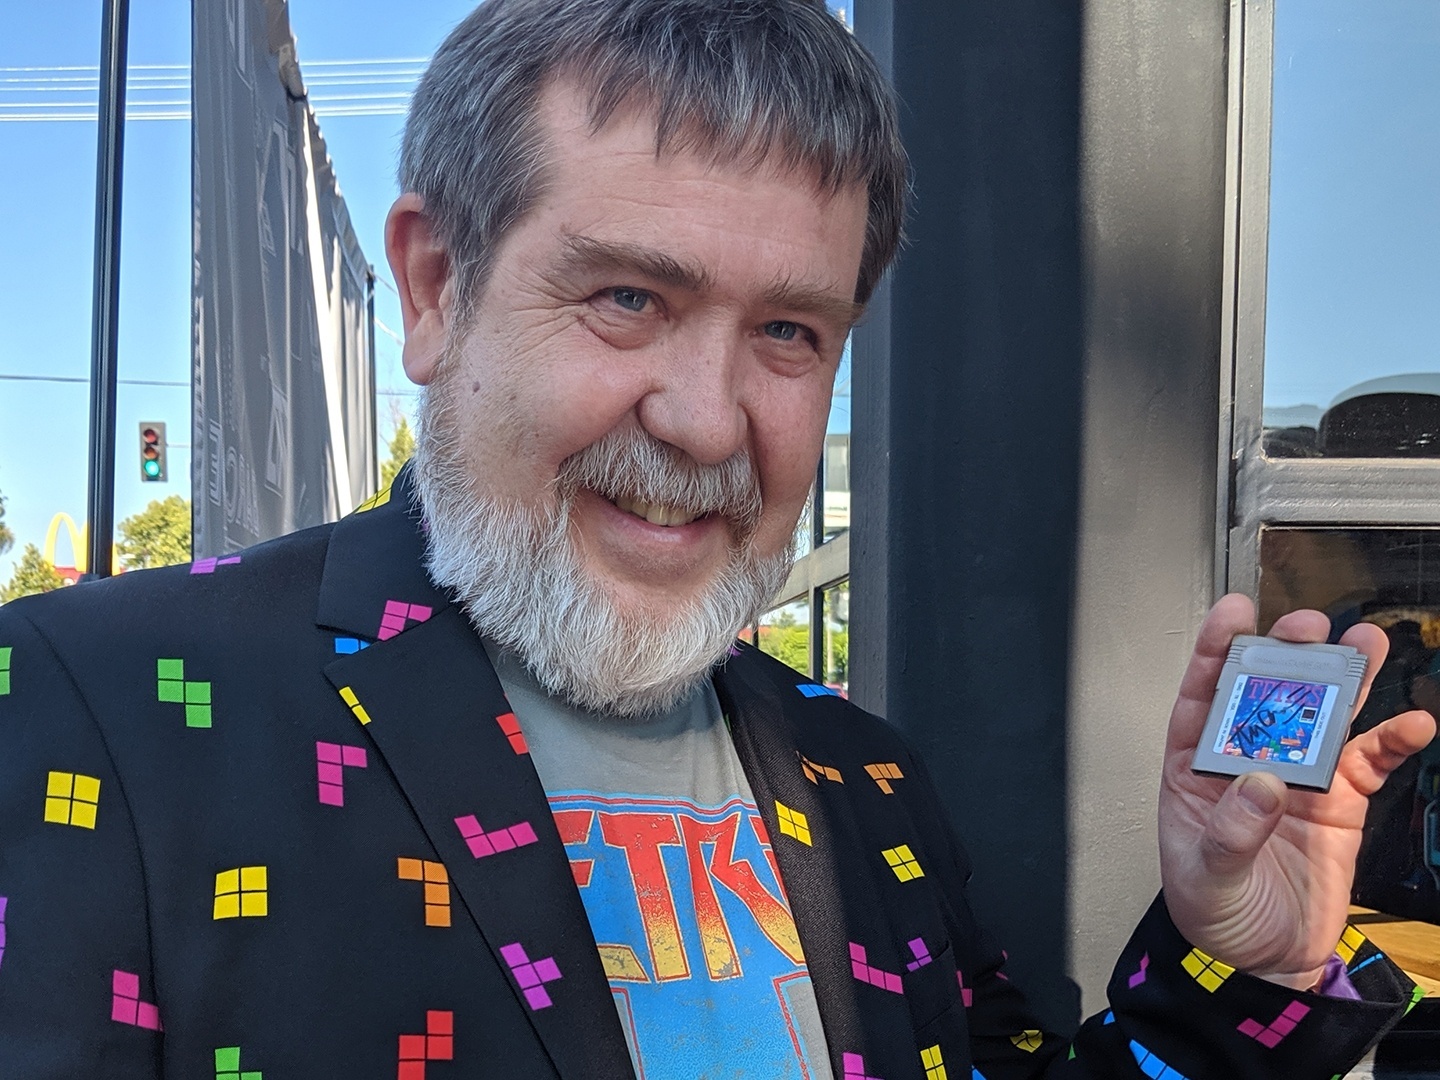 Tetris Creator Alexey Pajitnov Got No Game Royalties for 10 Years